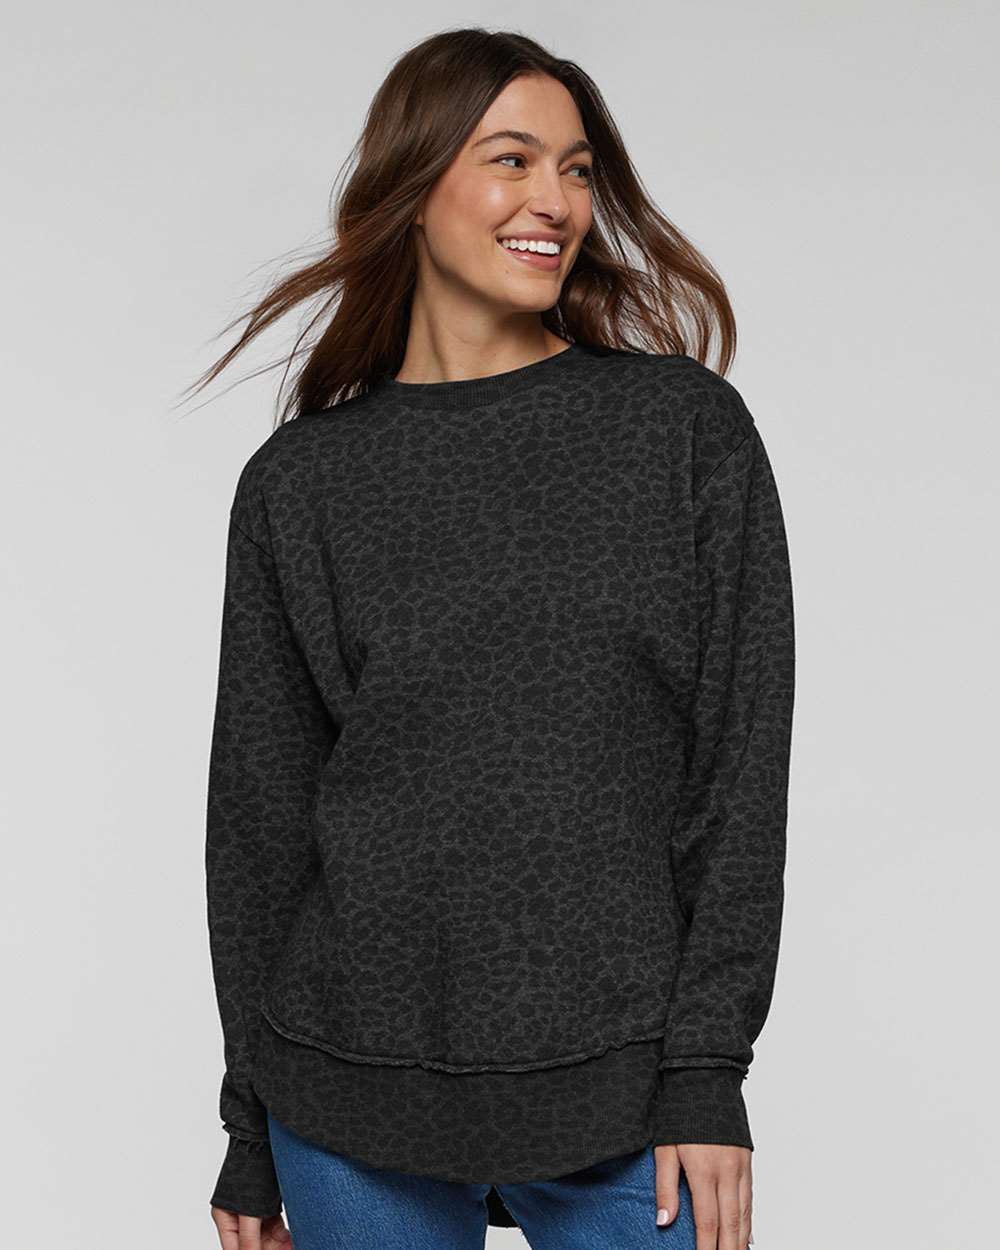 Onsted Women’s Sweatshirt